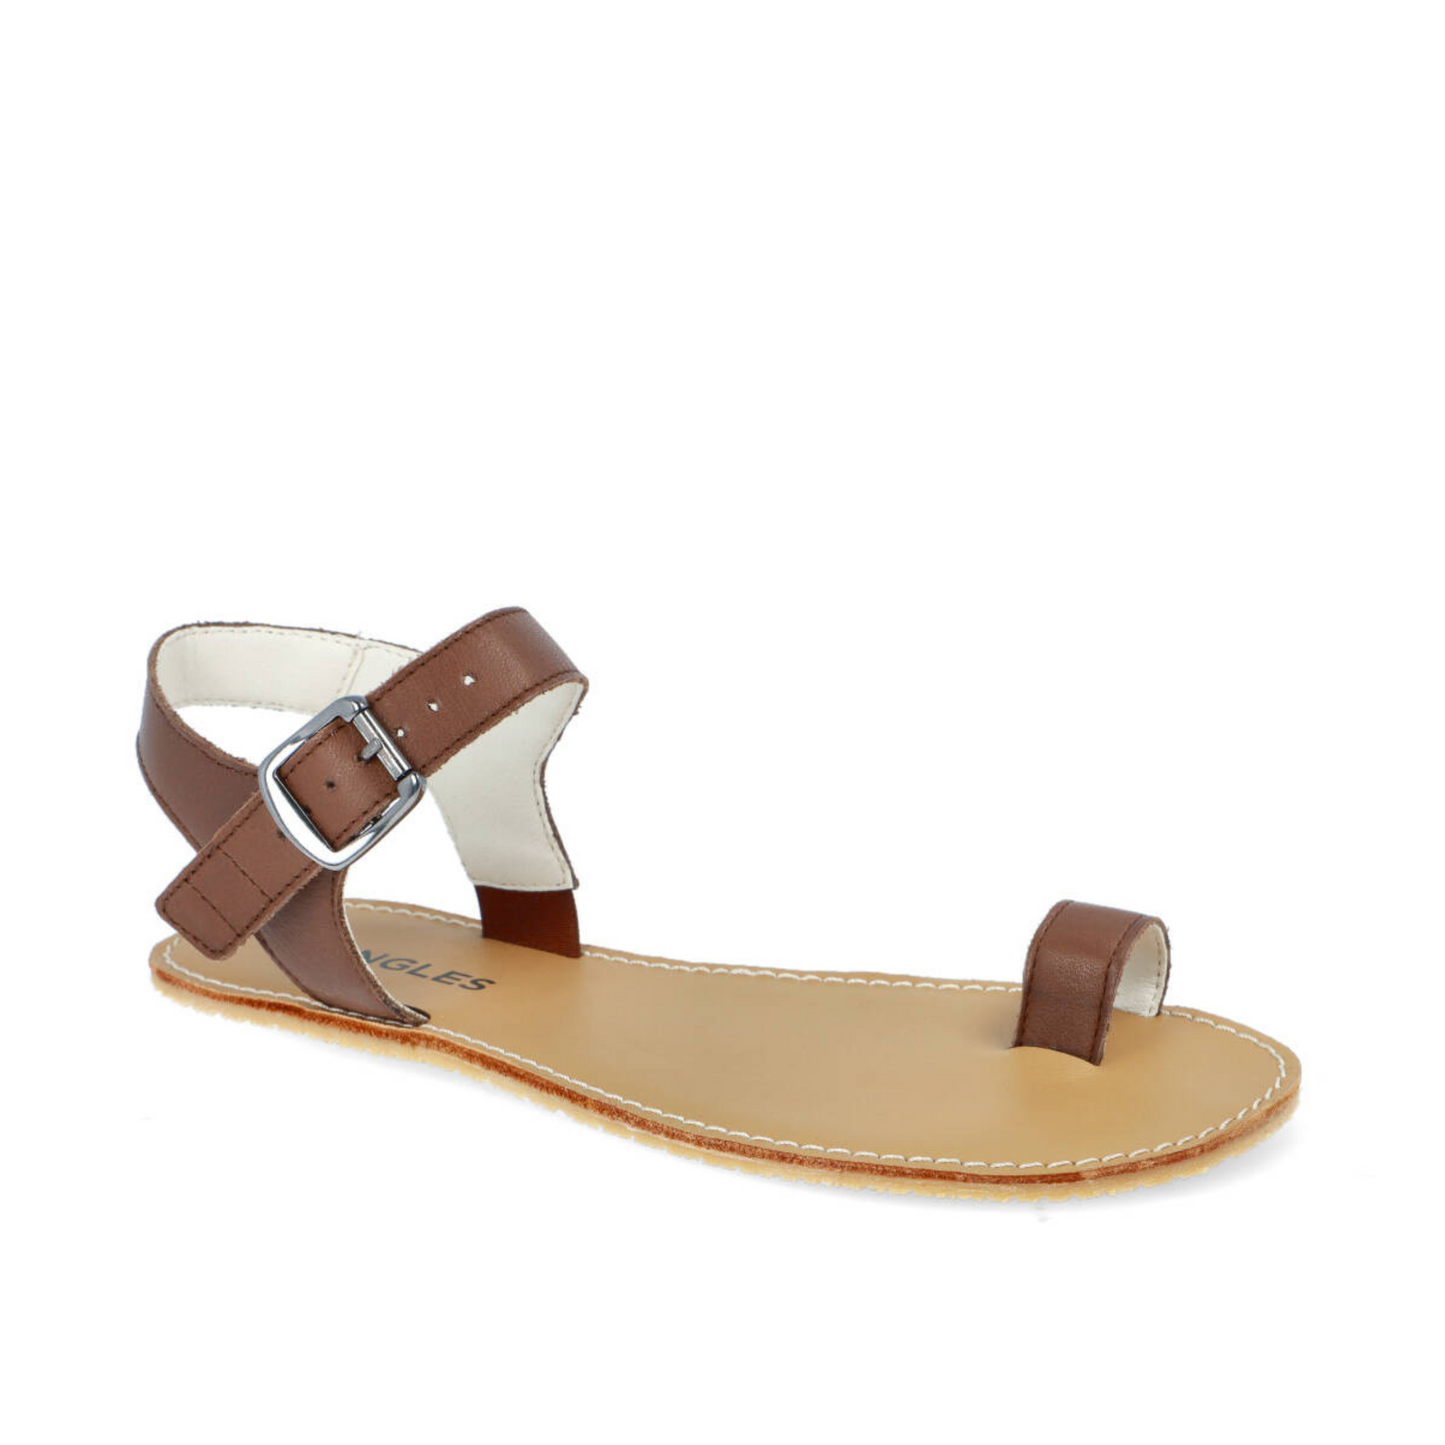 Angles Fashion - Aura Brown - Sandalias barefoot